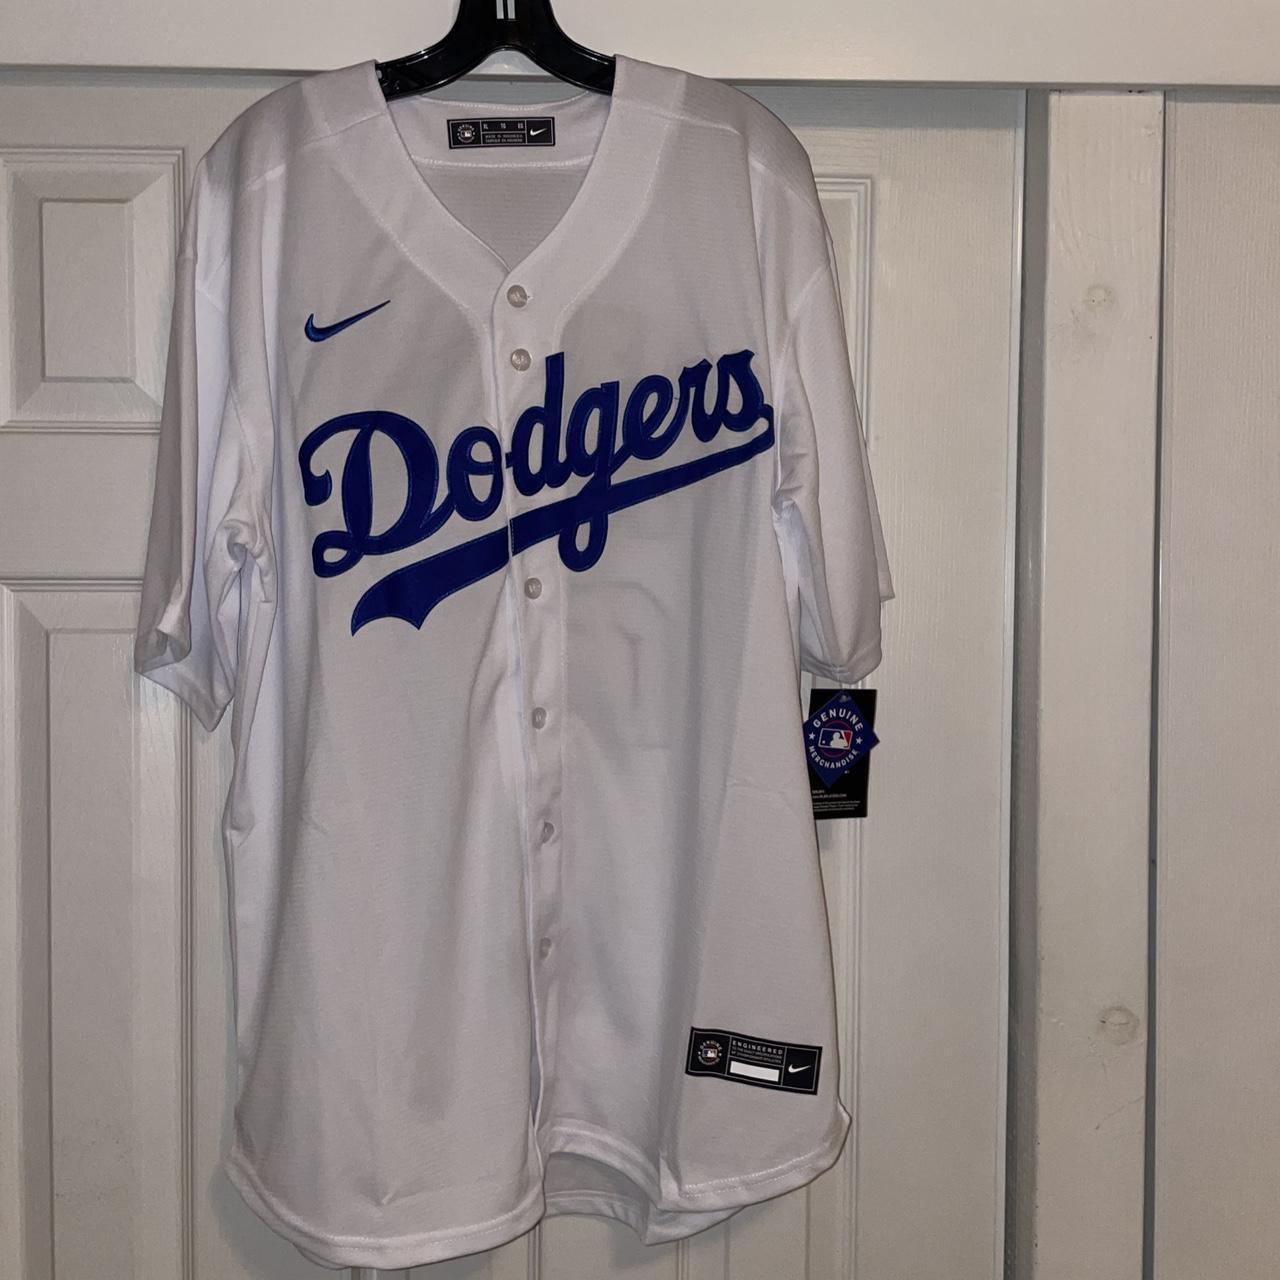 Dodgers baseball kershaw jersey! Bought for 100 - Depop